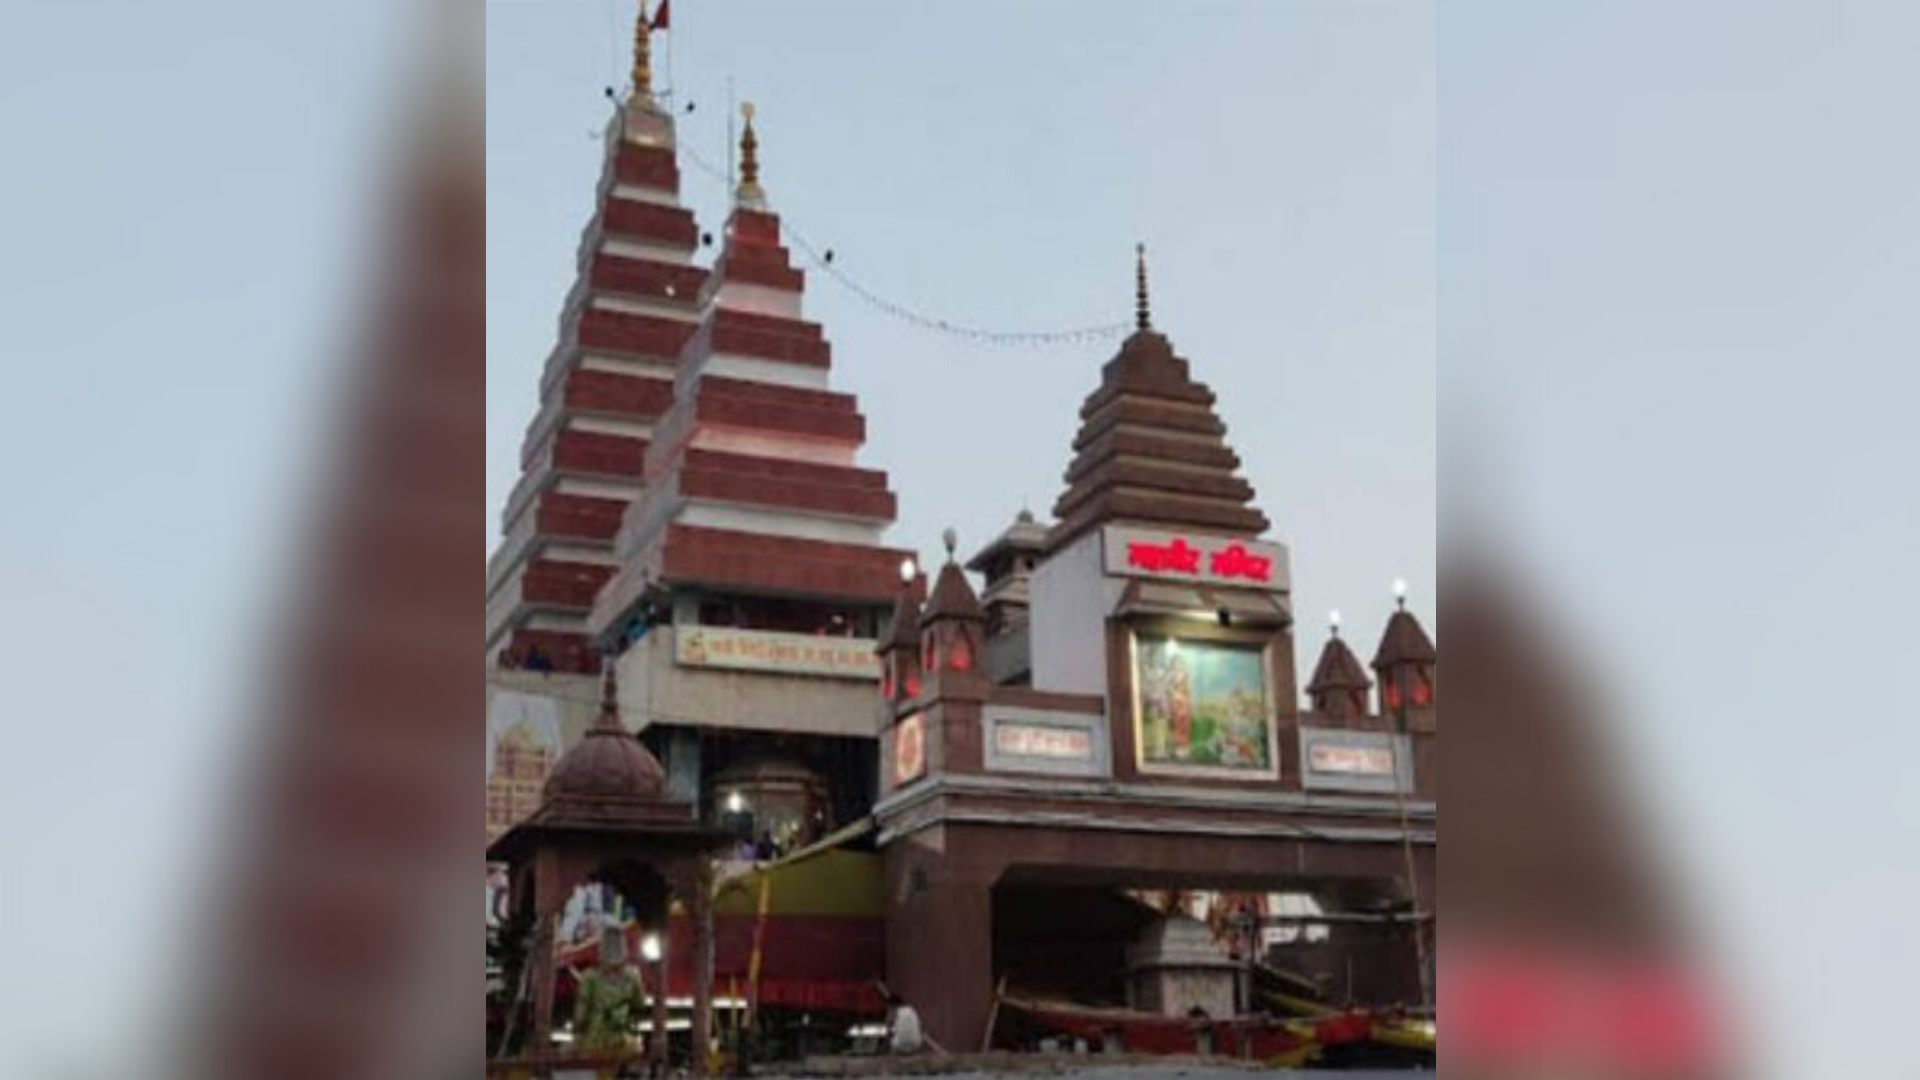 Patnas Hanuman temple to soon start kitchen for Ram temple devotees